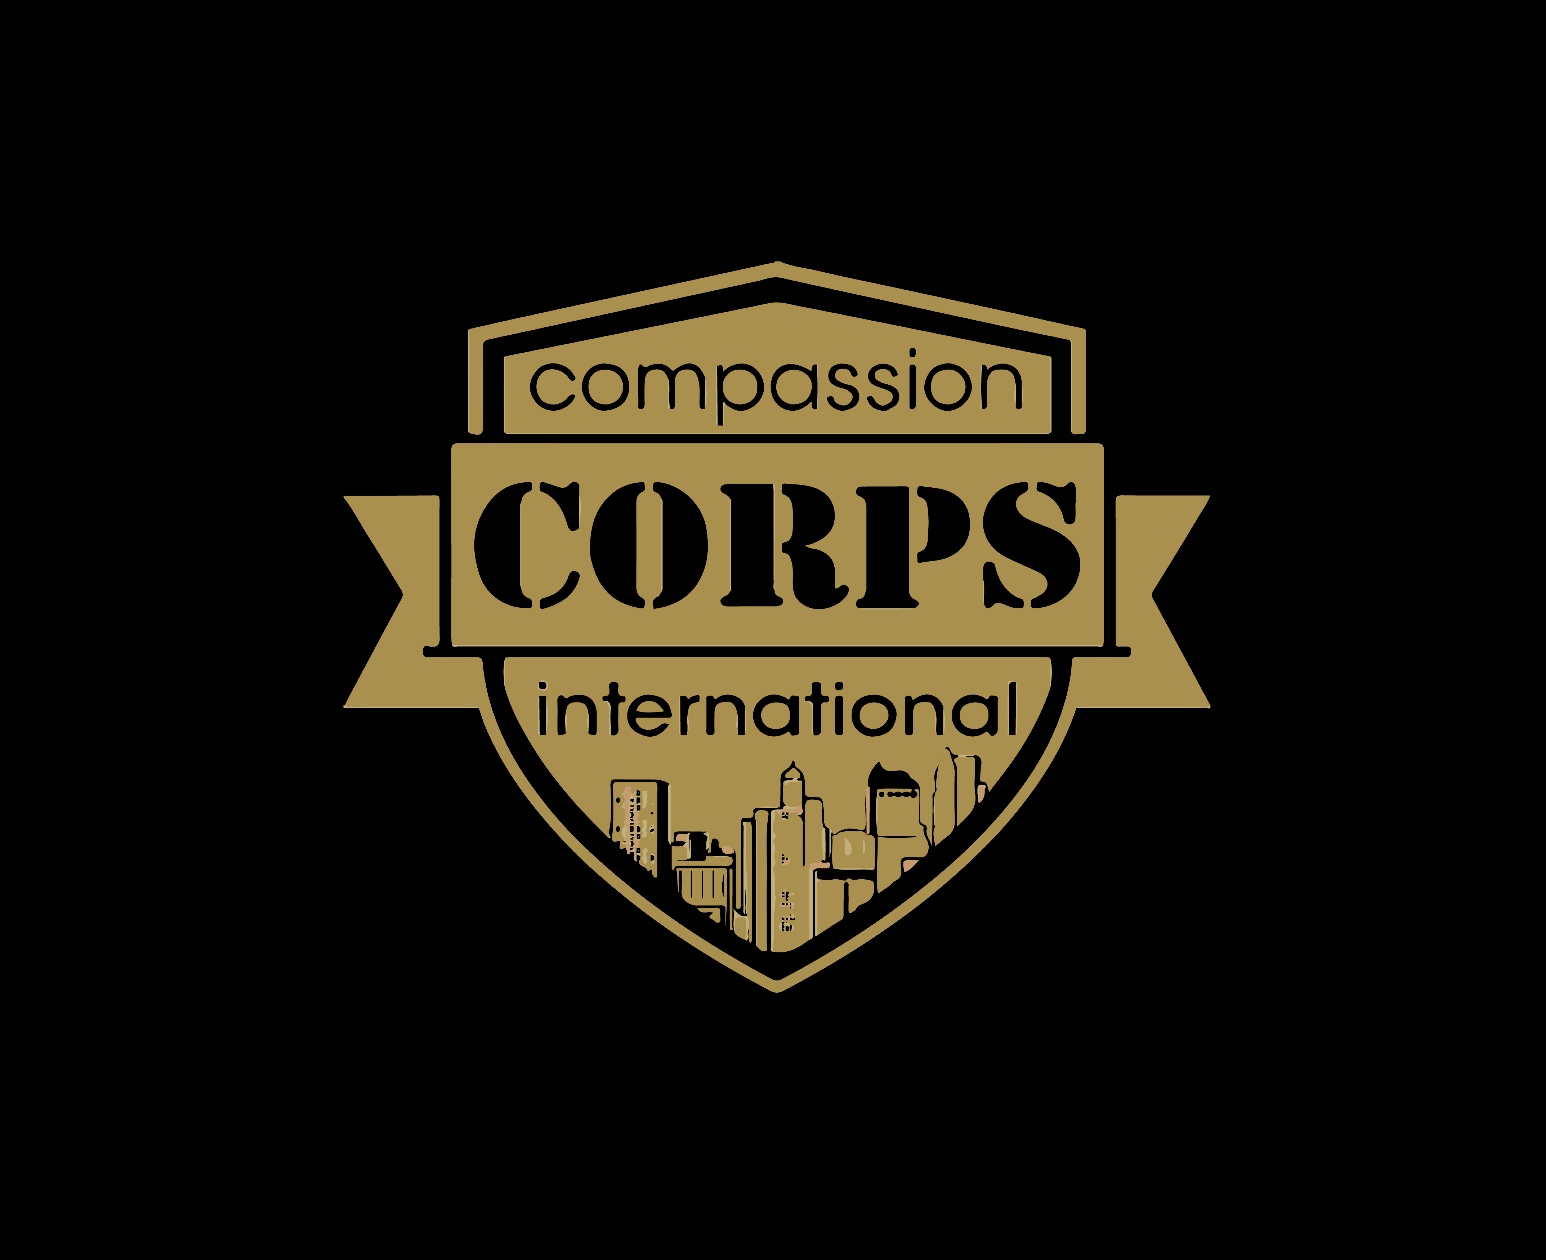 Compassion Corps International